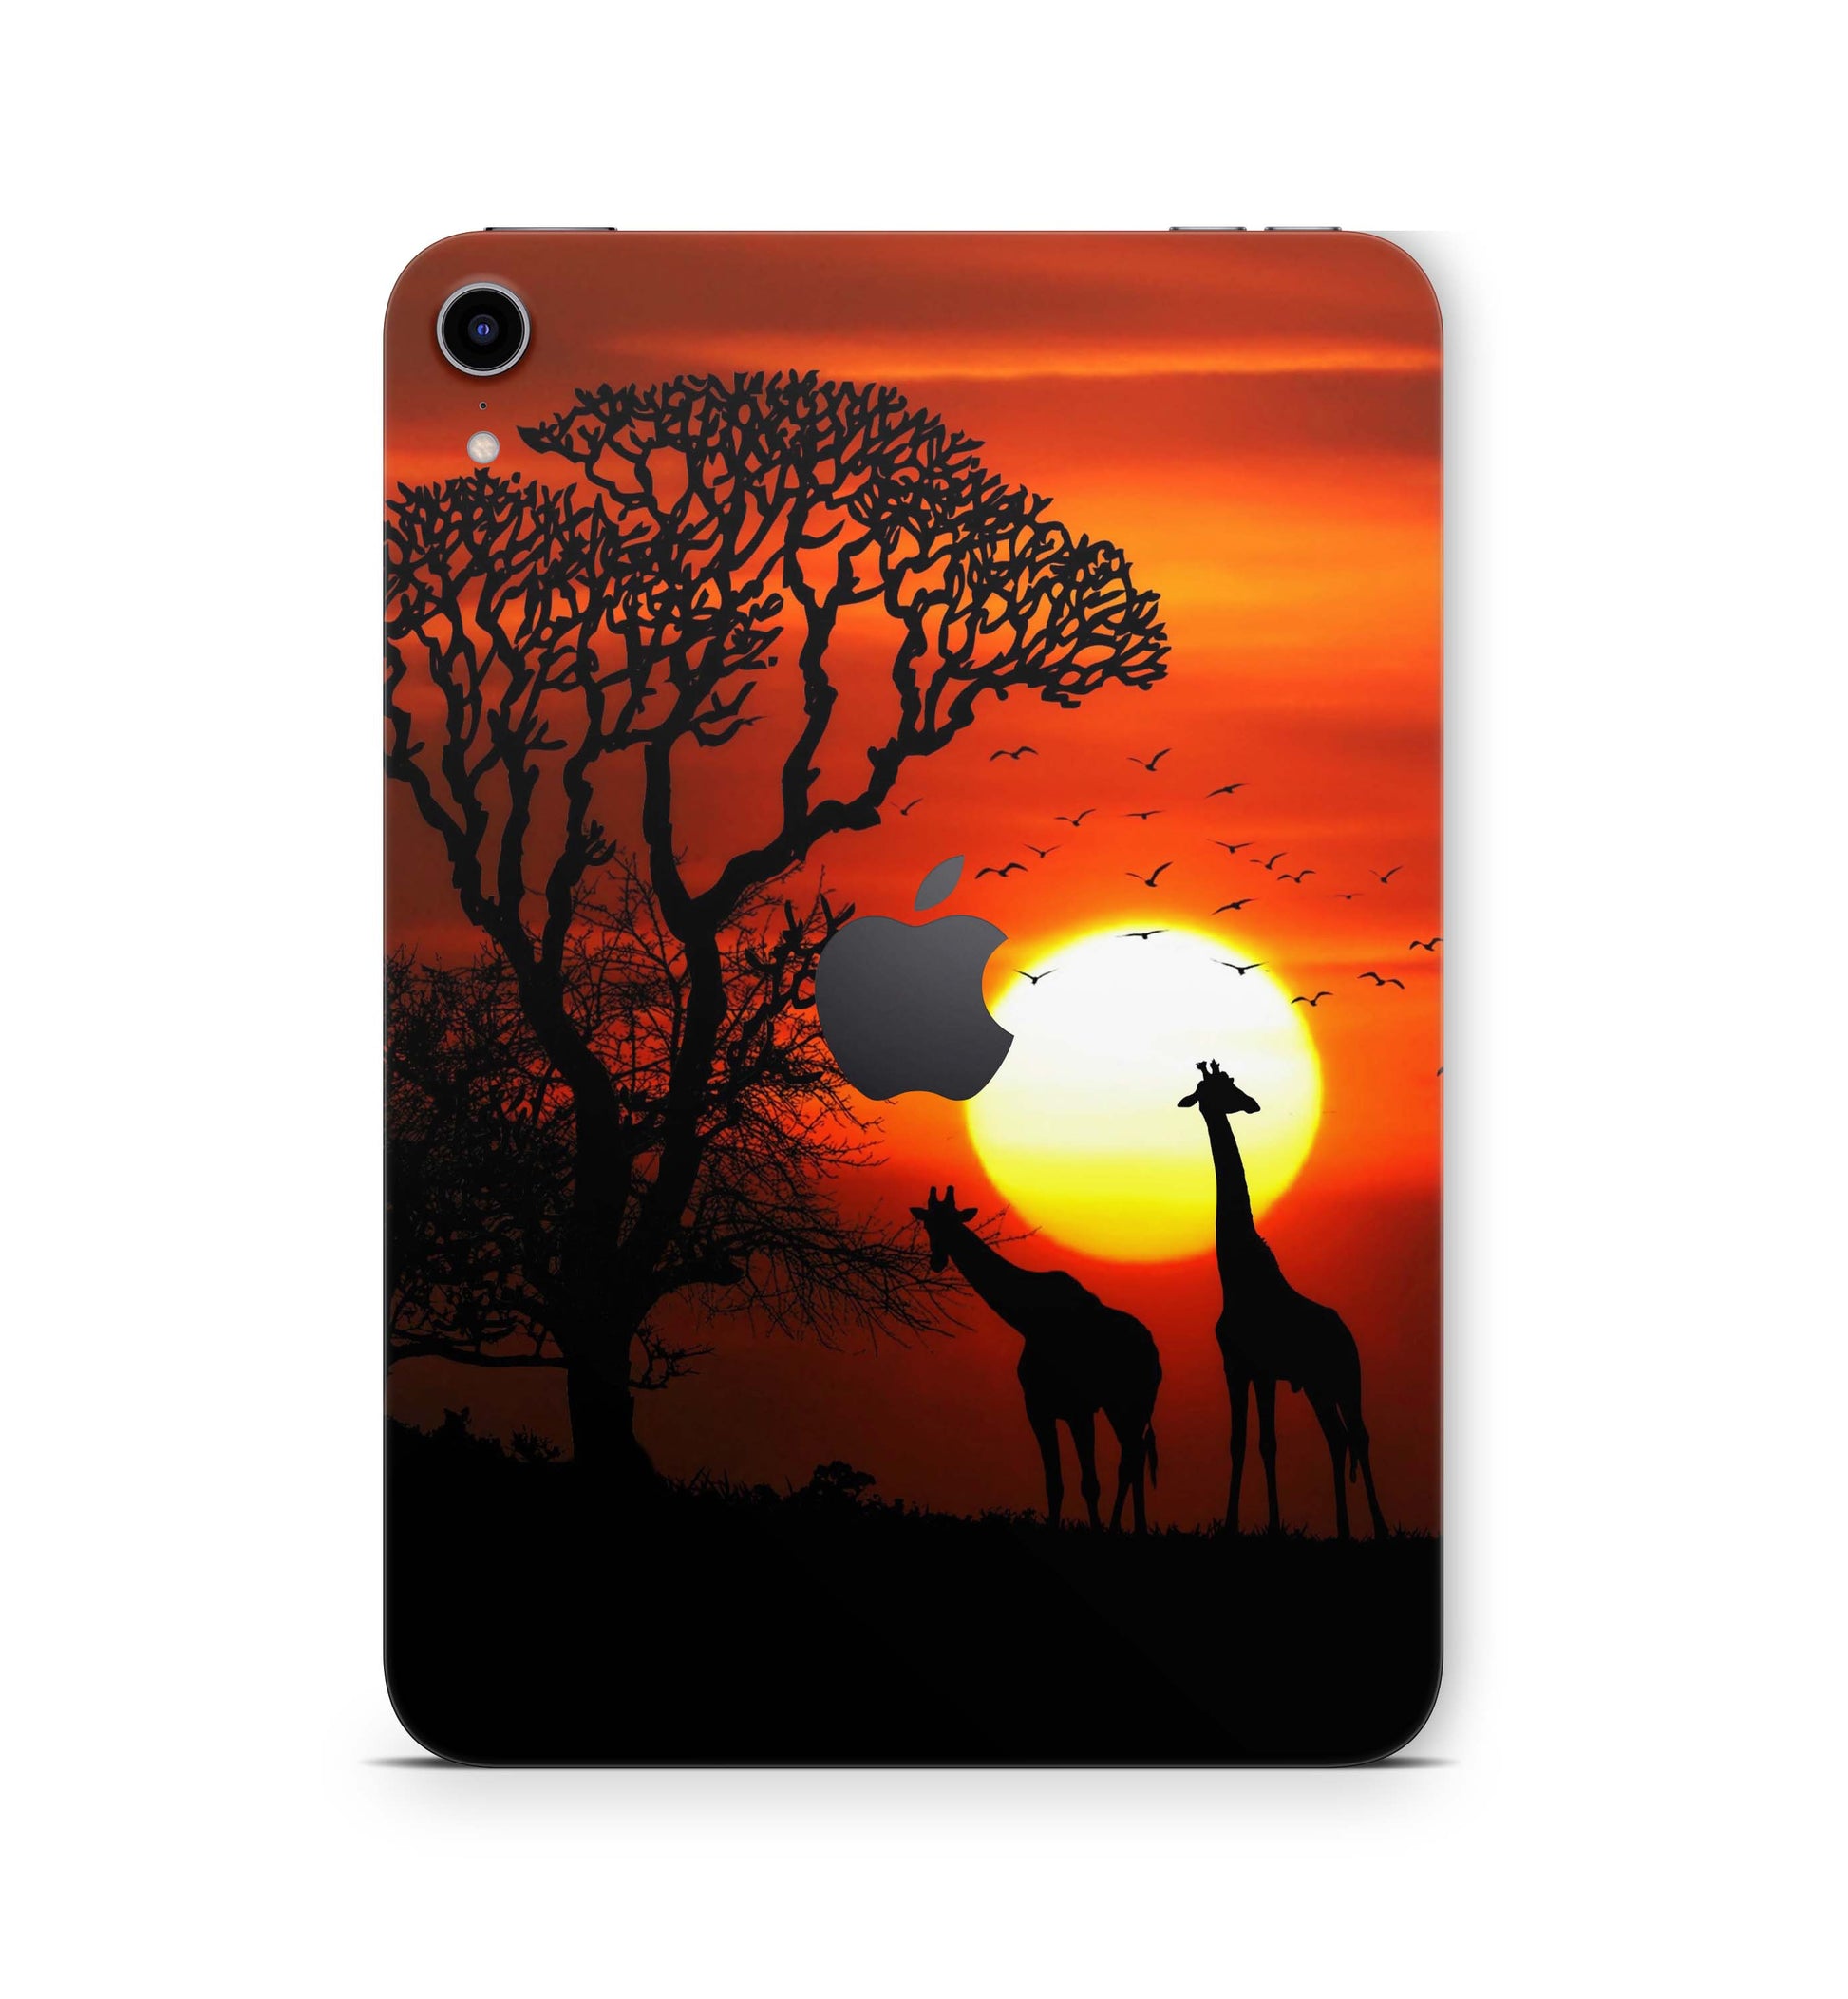 iPad Mini Skin Design Cover Folie Vinyl Skins & Wraps für alle iPad Mini Modelle Aufkleber Skins4u Afrika  